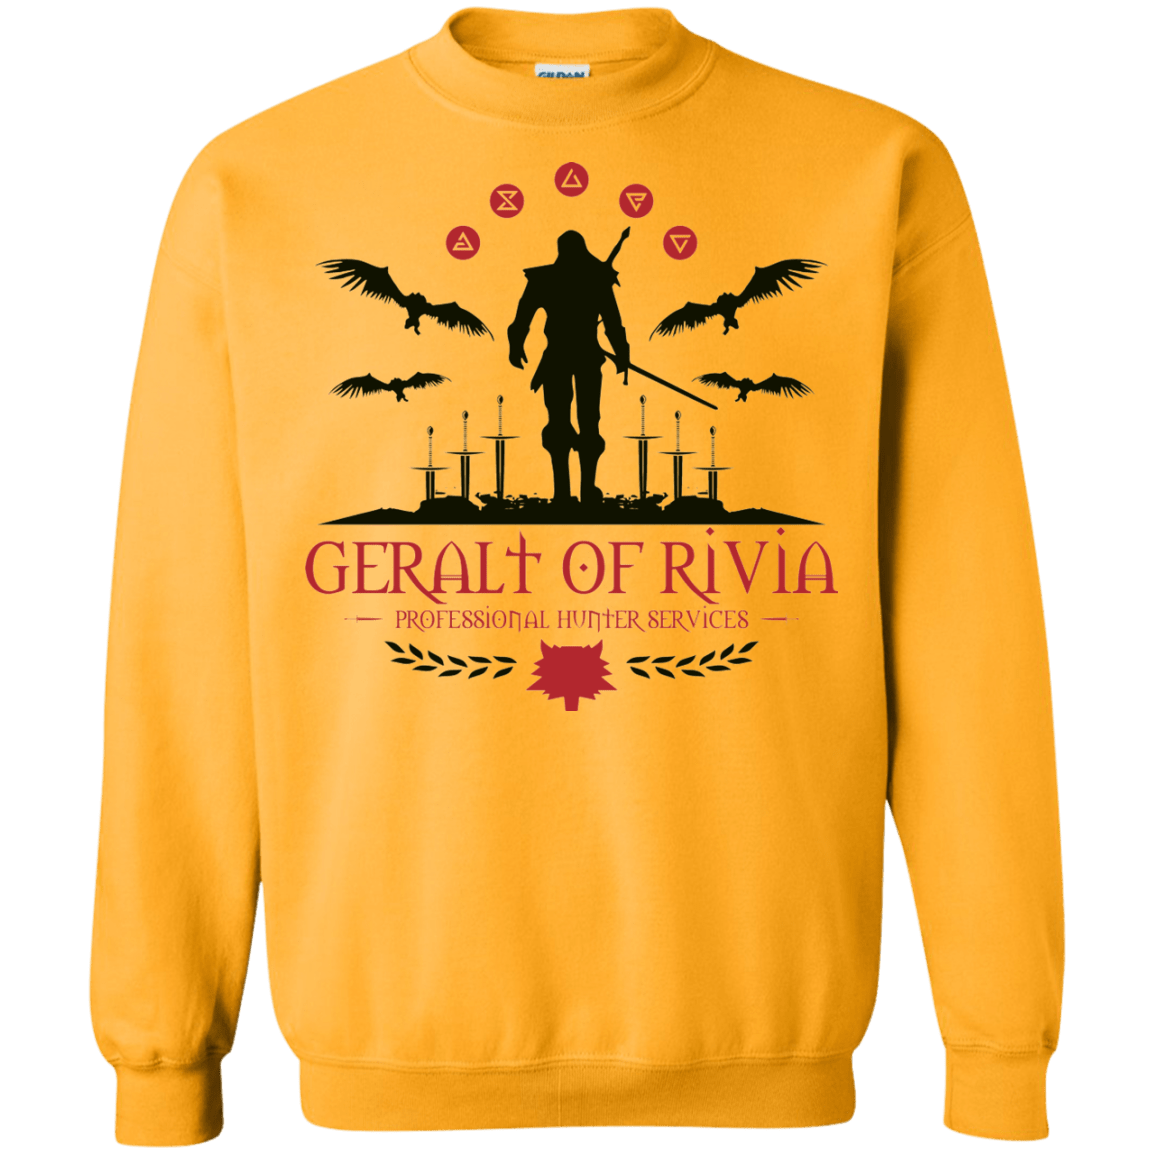 Sweatshirts Gold / Small The Witcher 3 Wild Hunt Crewneck Sweatshirt